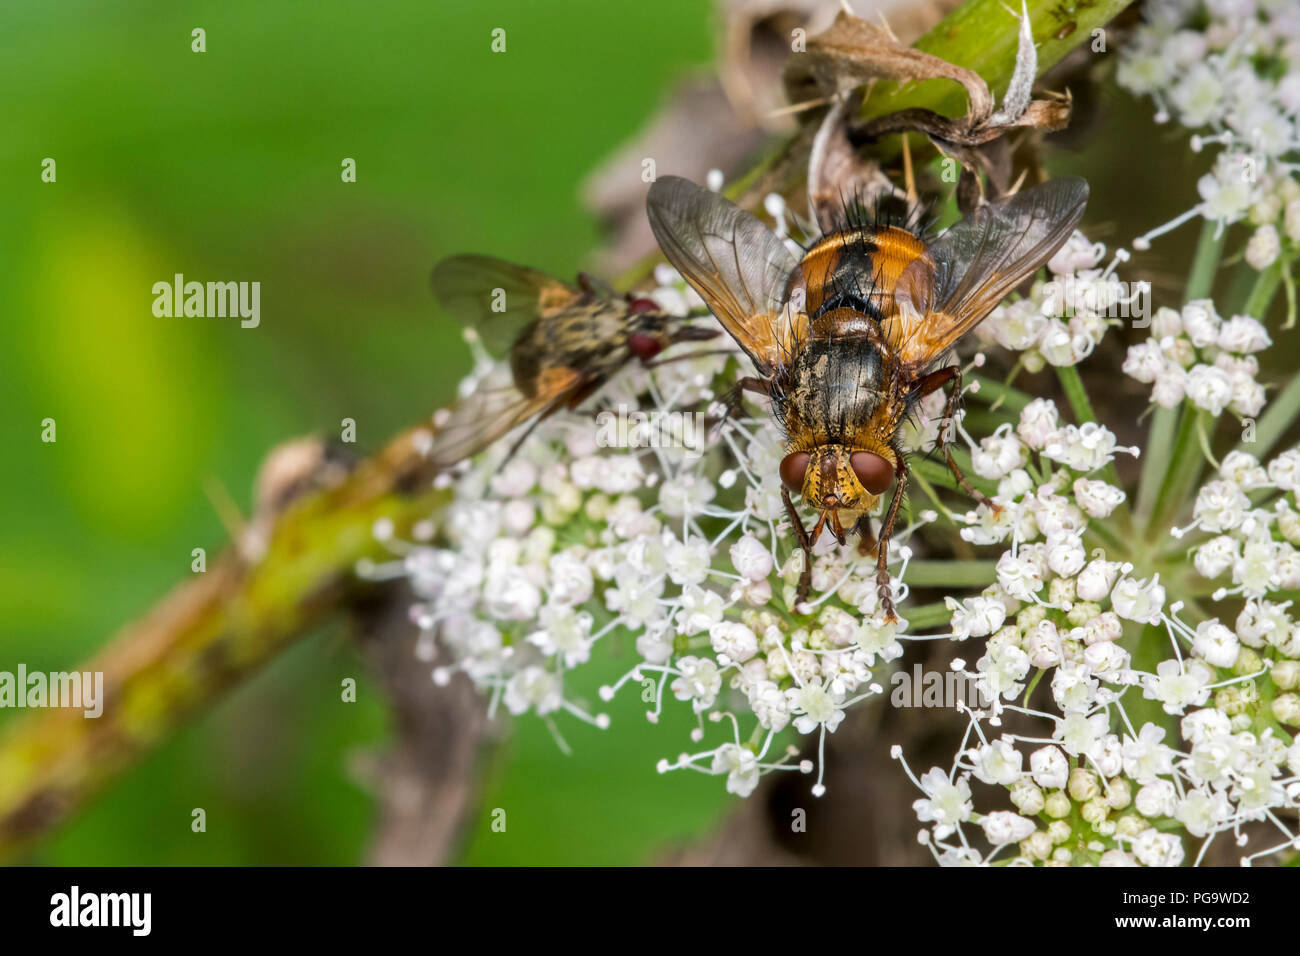 Parásito / Mosca tachinid / Mosca Tachina fera alimentándose de néctar de flor umbellifer en verano Foto de stock